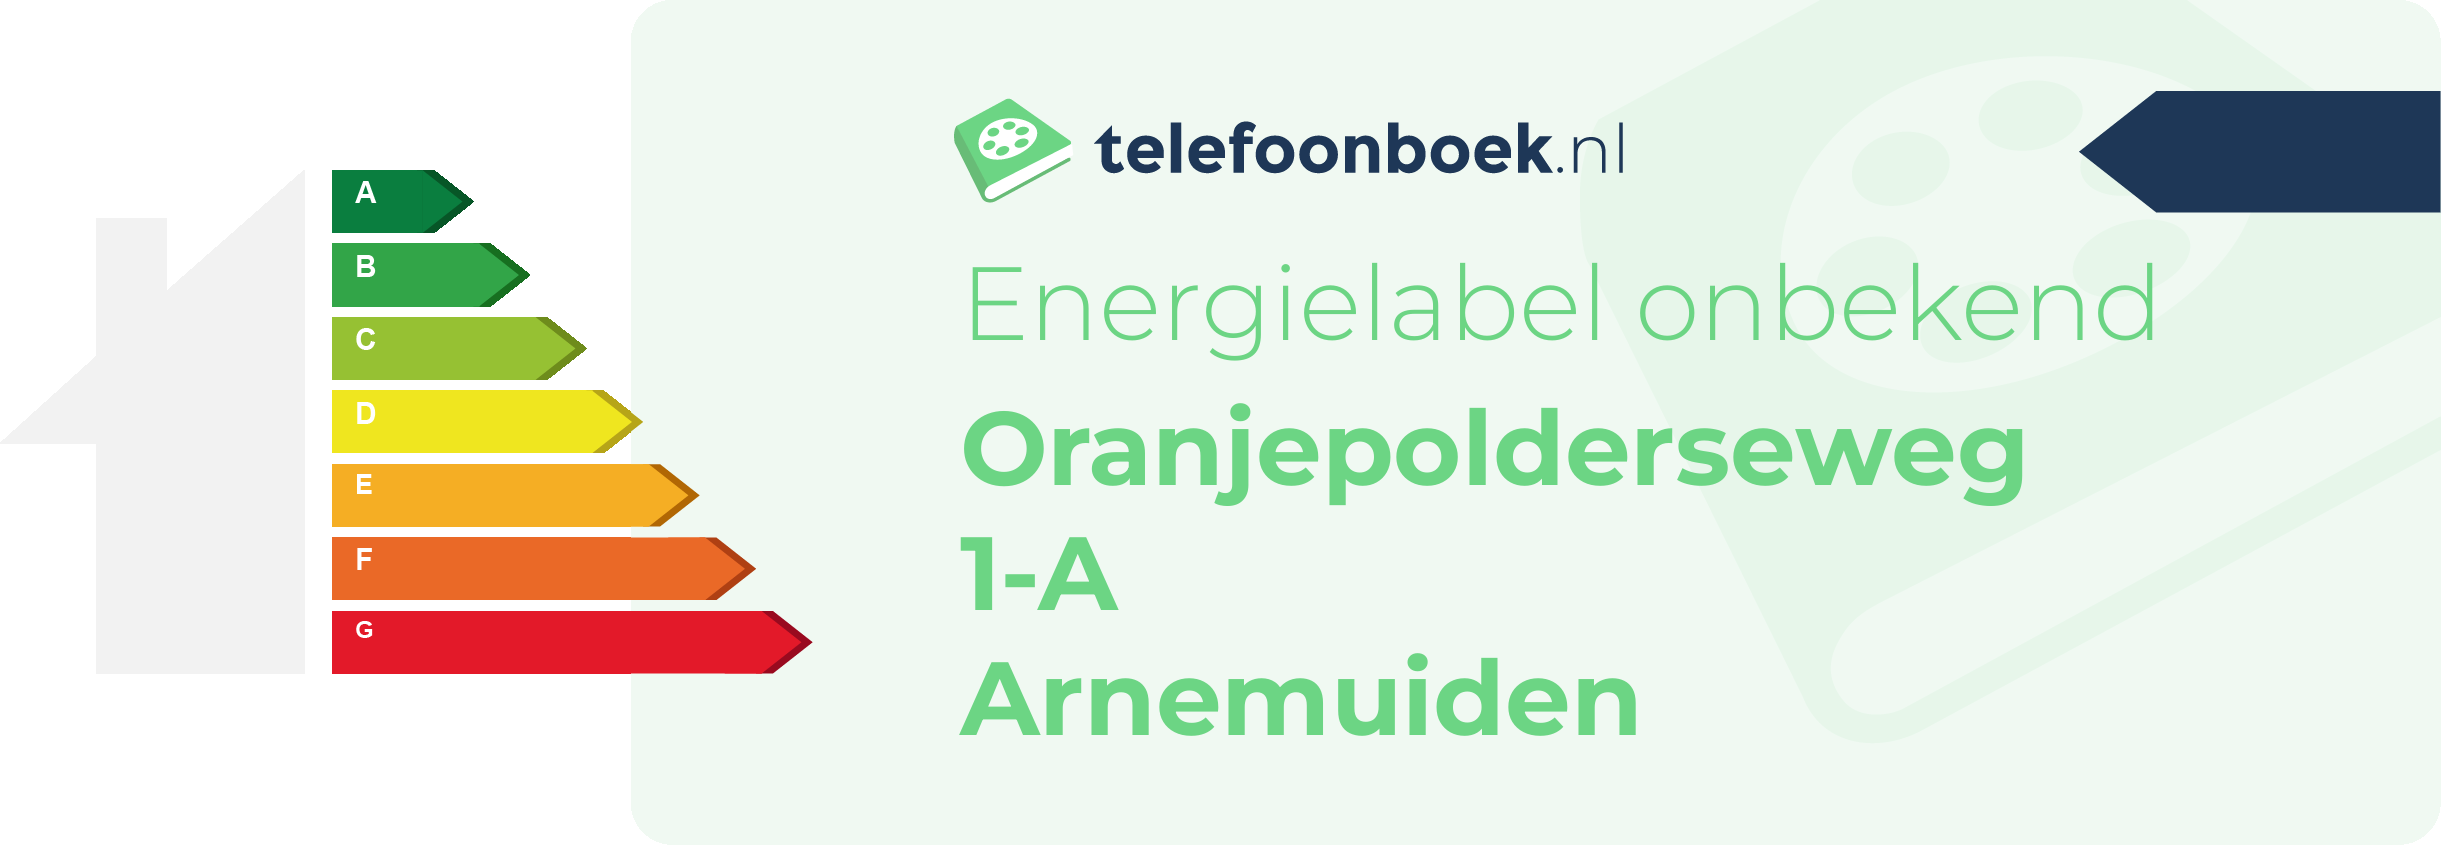 Energielabel Oranjepolderseweg 1-A Arnemuiden